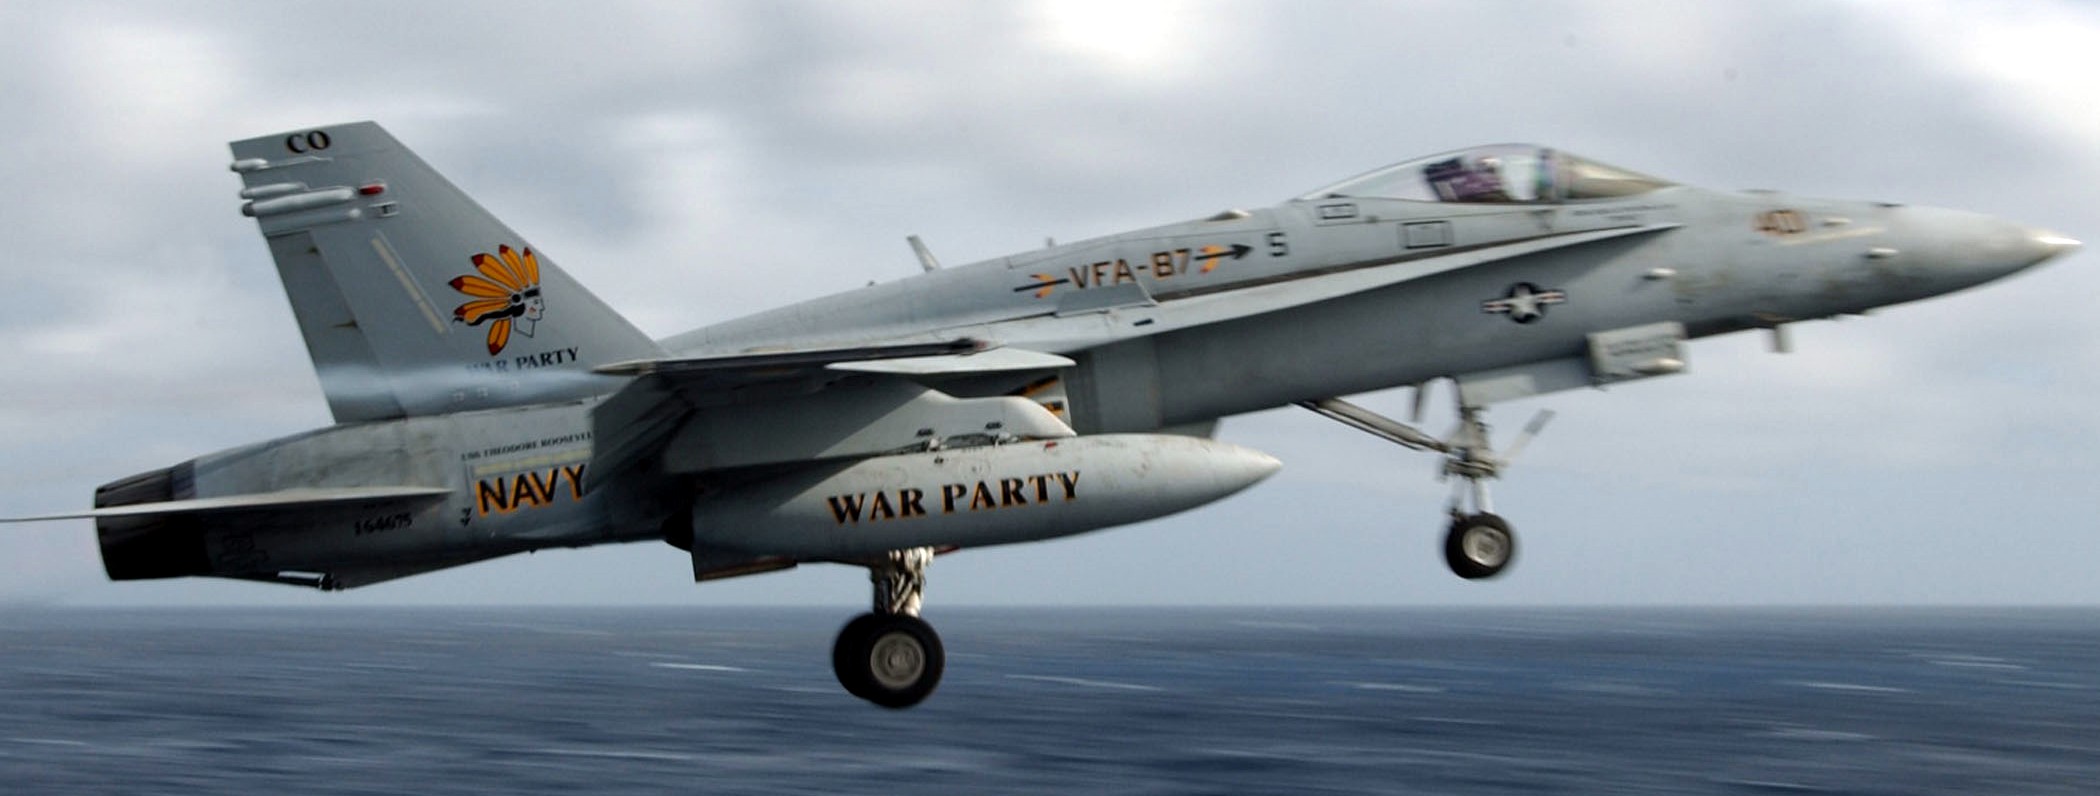 vfa-87 golden warriors strike fighter squadron f/a-18c hornet cvw-8 uss theodore roosevelt cvn-71 us navy 135p